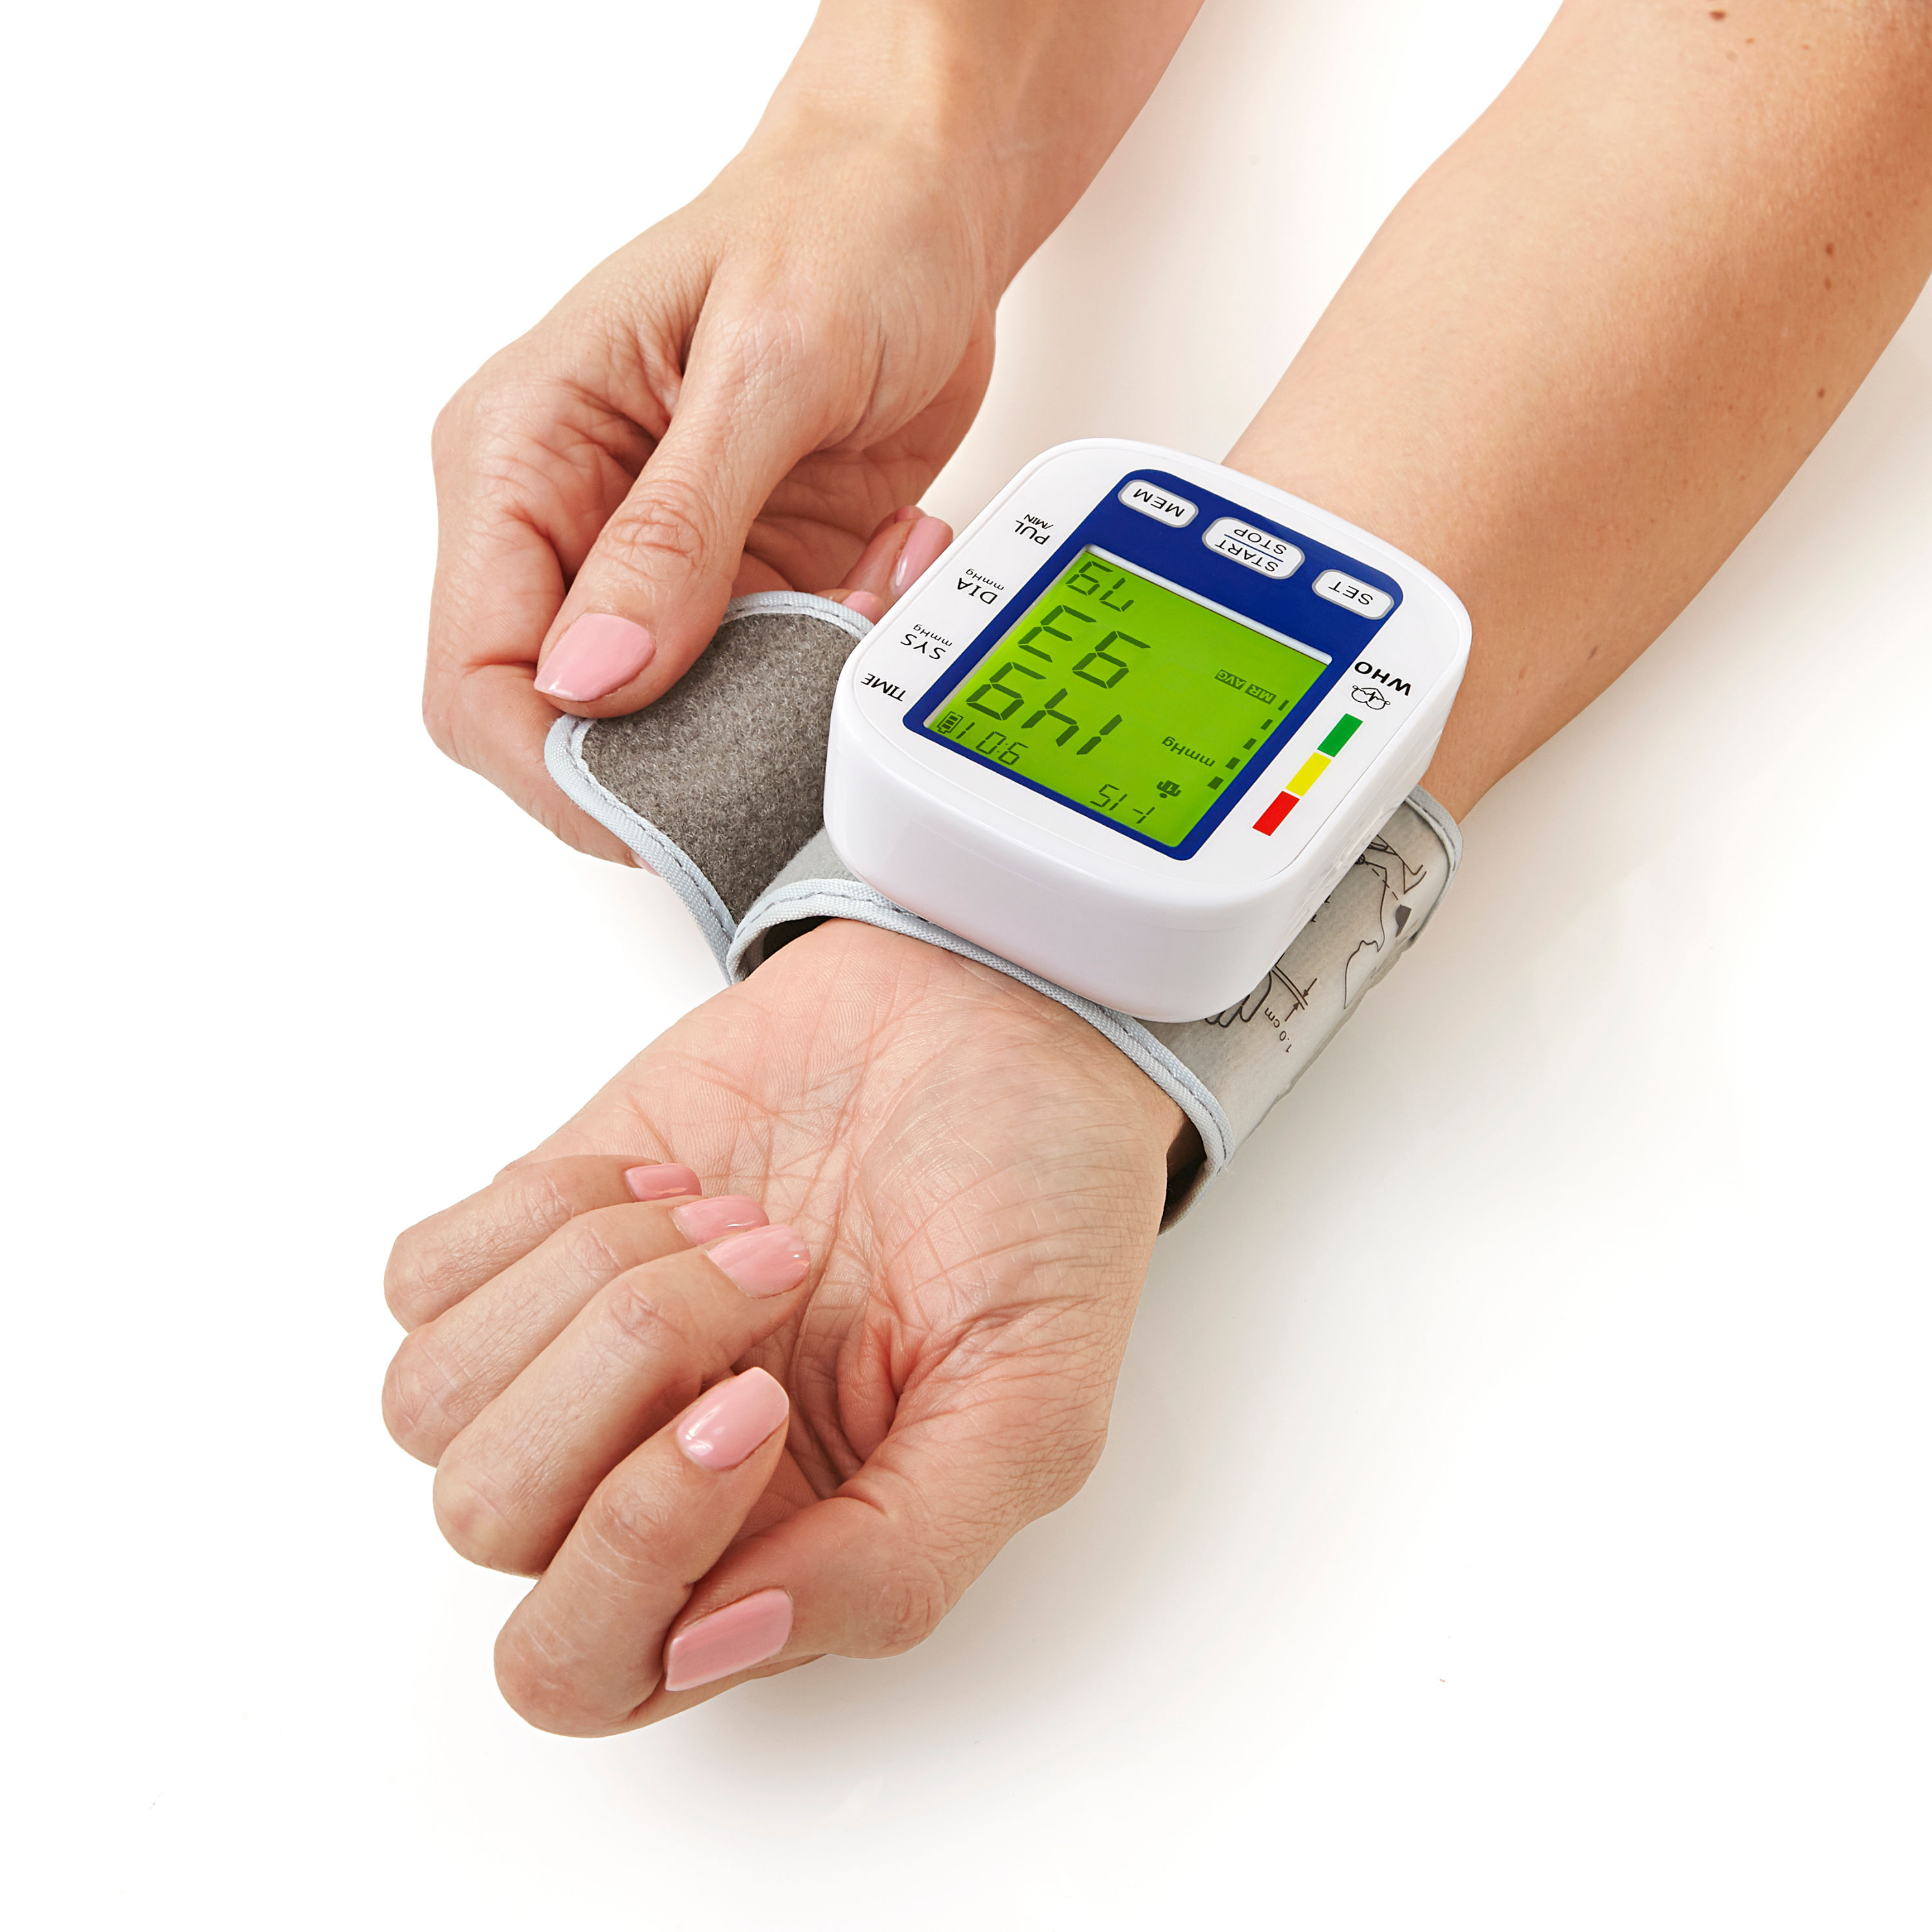 Blutdruckmessgerät Handgelenk jetzt bei Weltbild.de bestellen